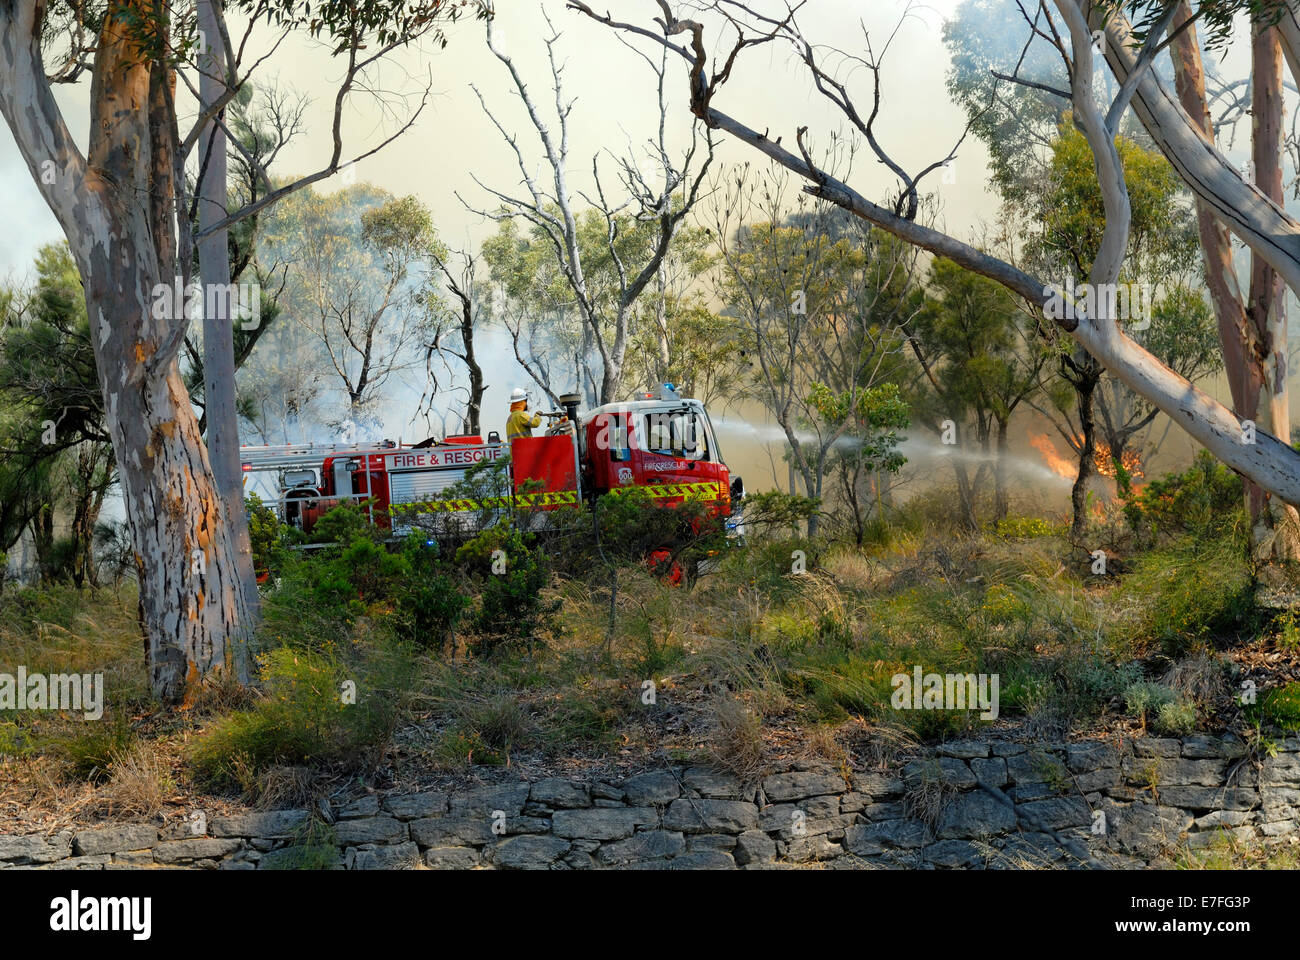 Firetruck tending to small bushfire in Kings Park and Botanic Garden. Perth, Western Australia Stock Photo